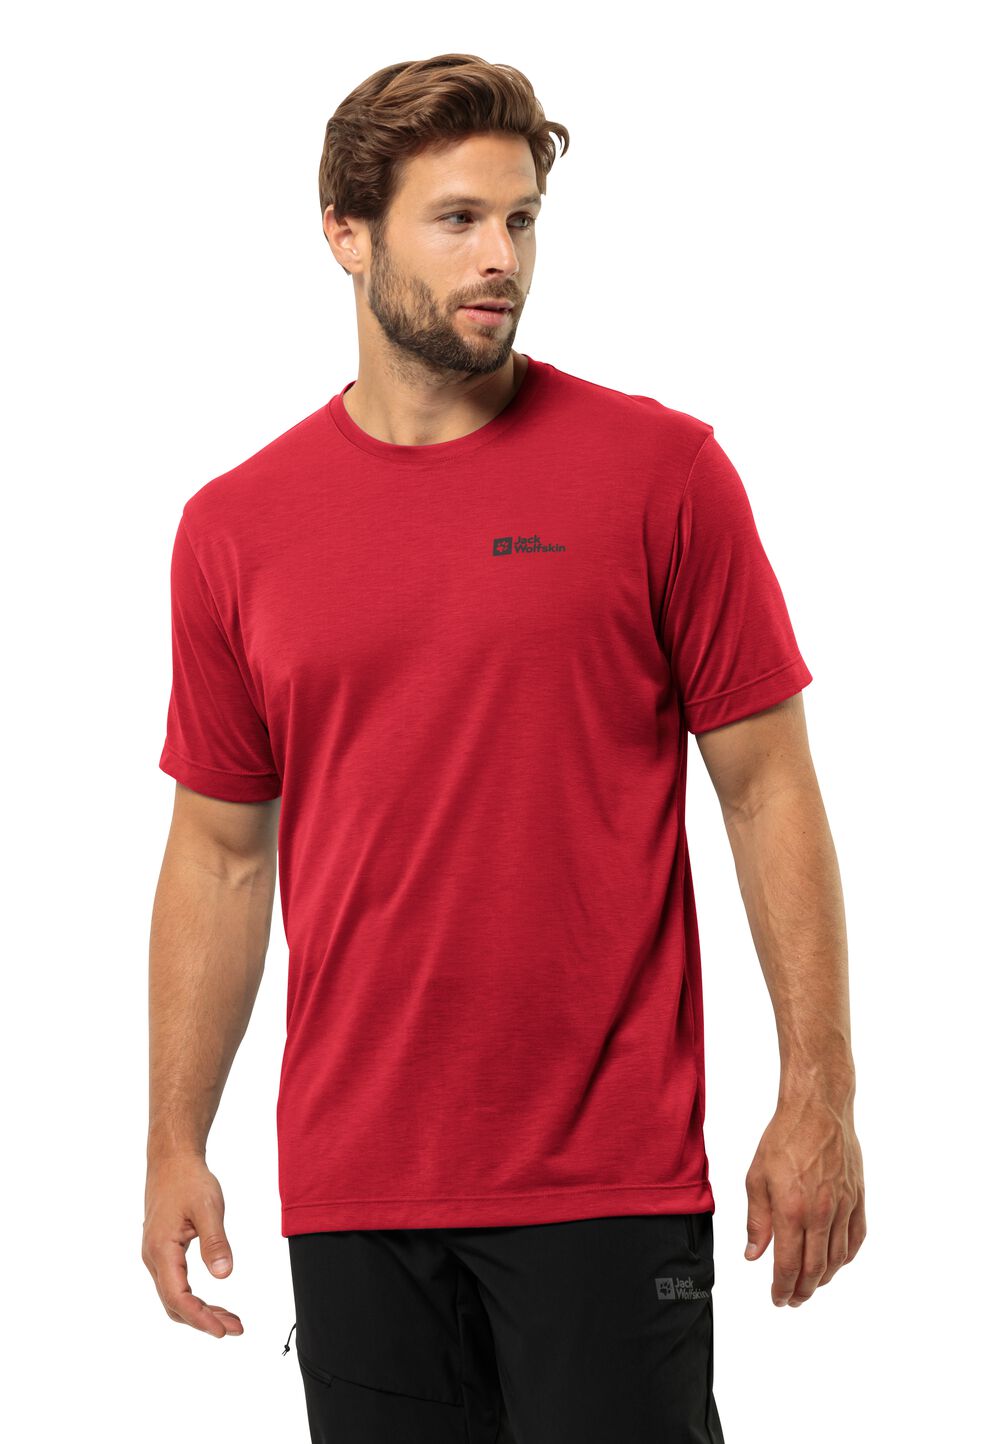 Jack Wolfskin Vonnan S S T-Shirt Men Functioneel shirt Heren S rood red glow